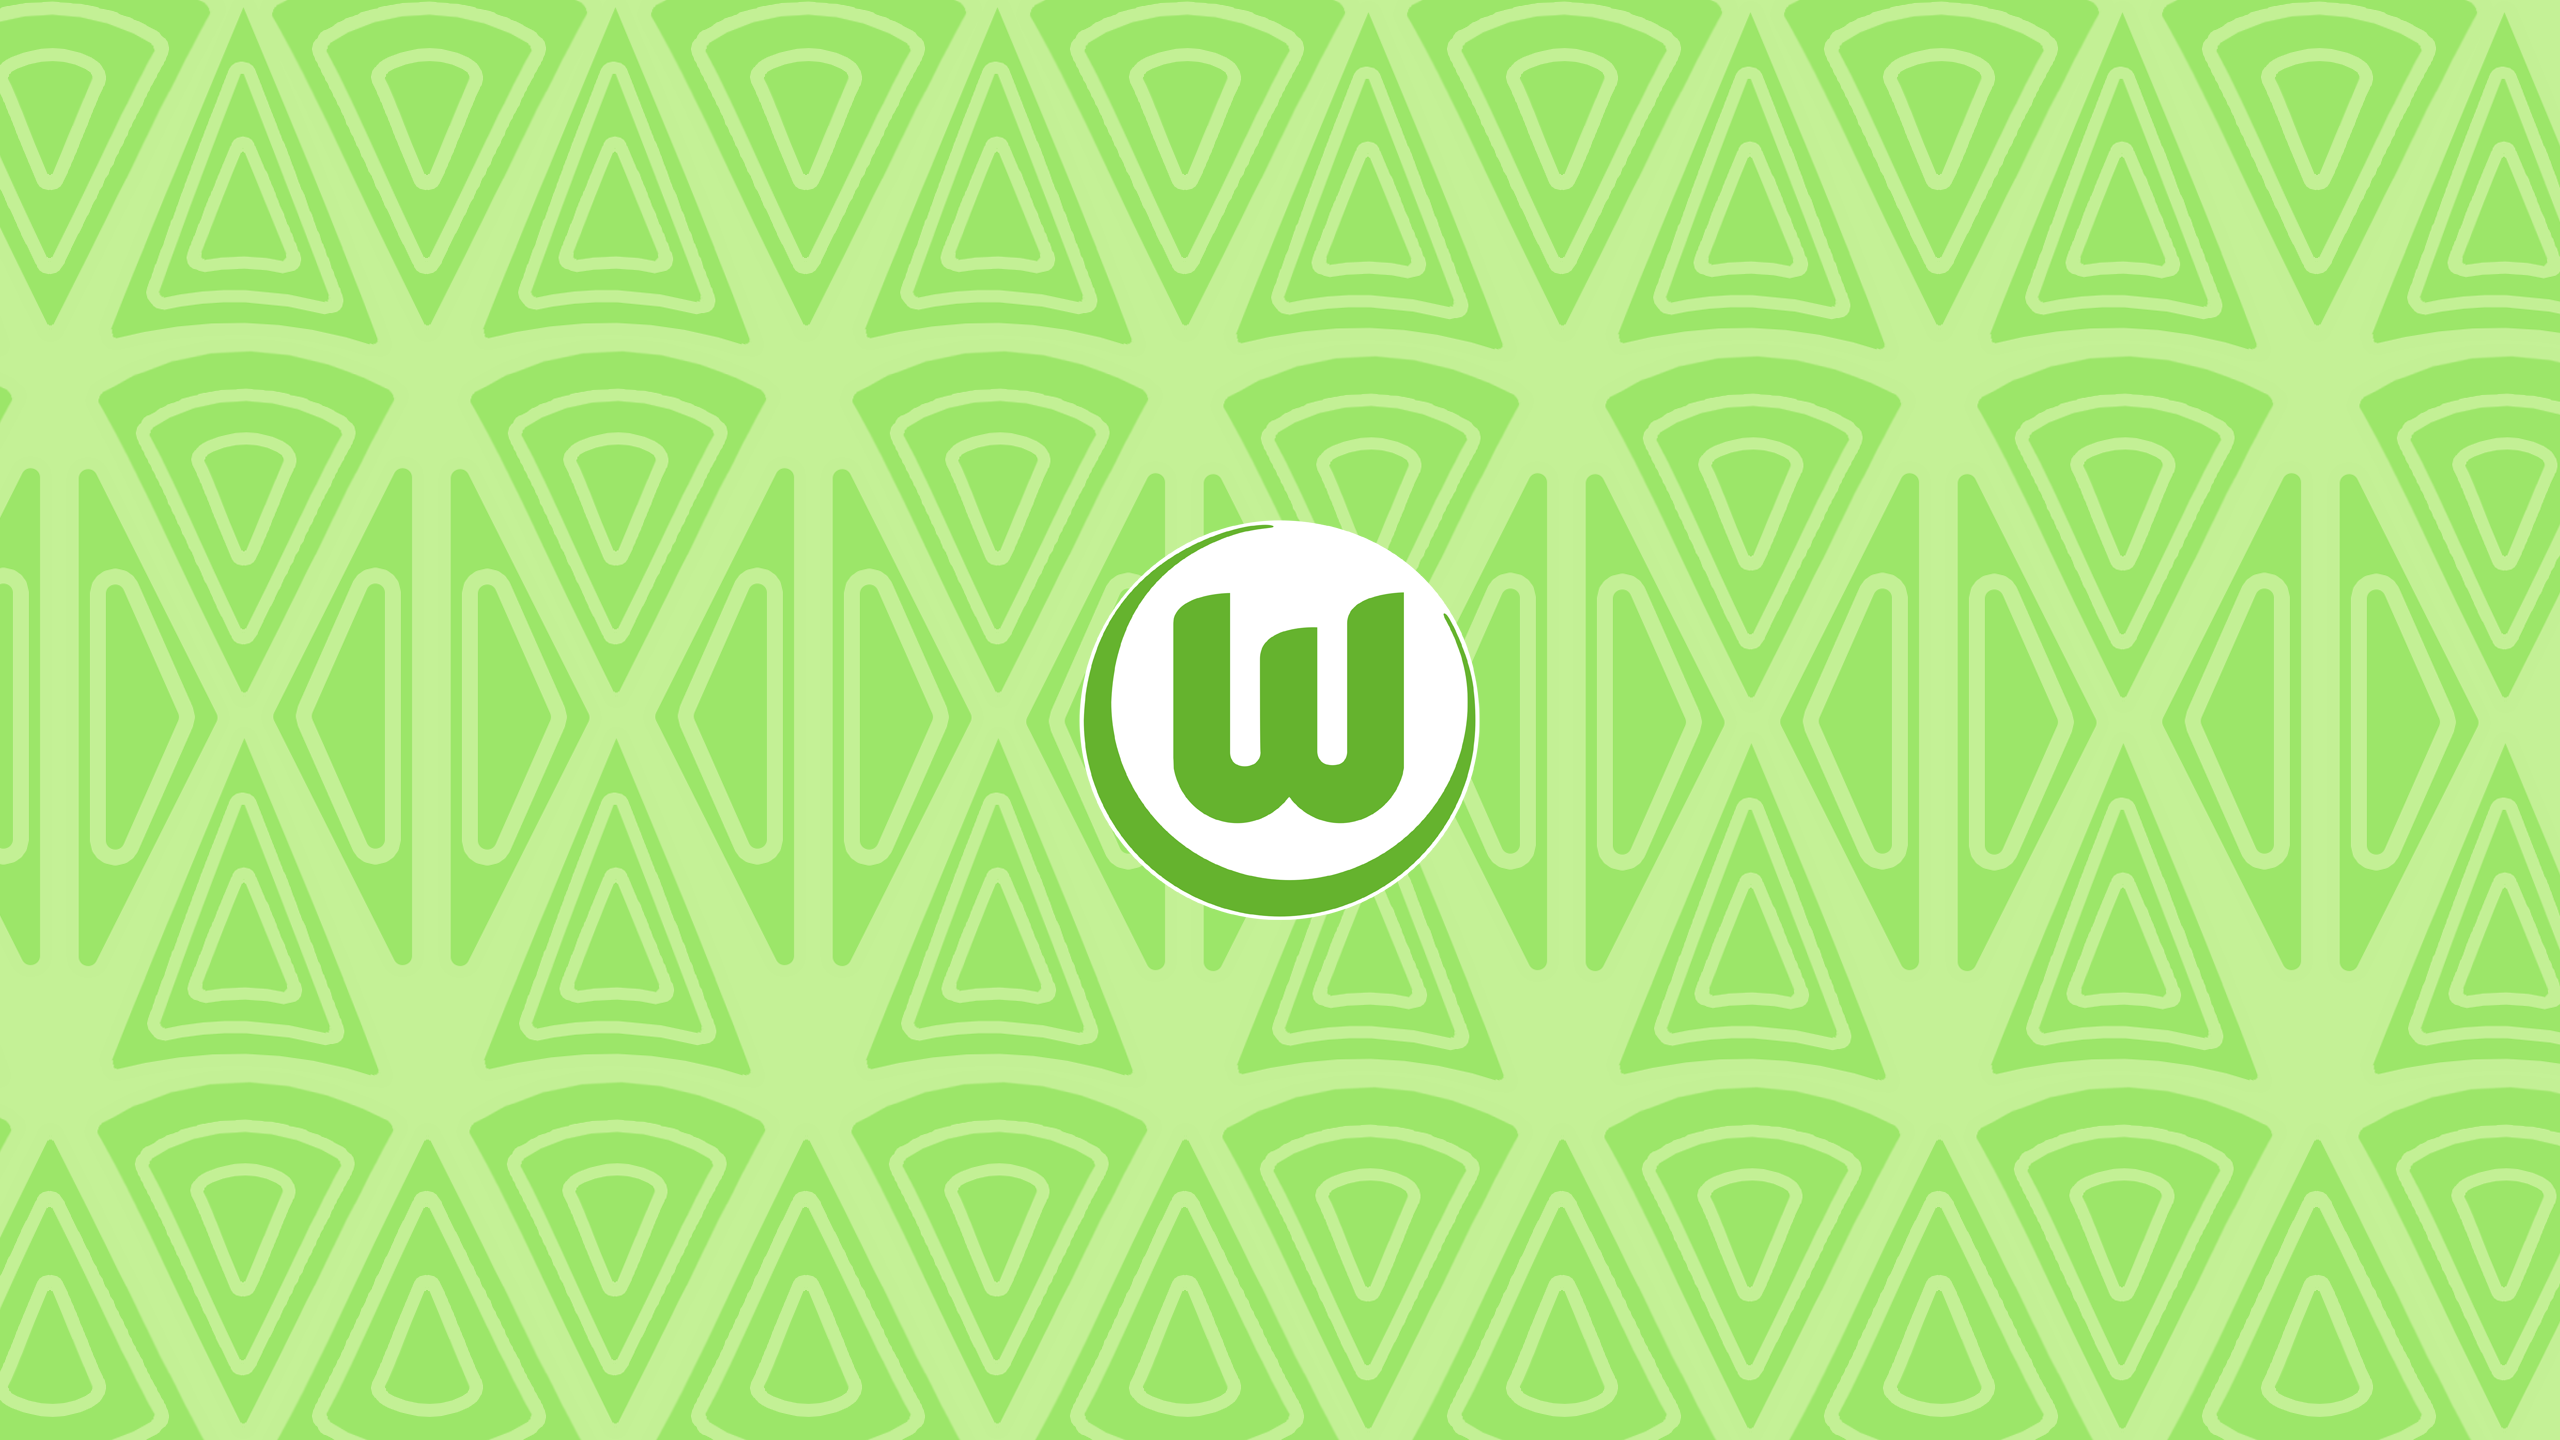 VfL Wolfsburg - Square Bettor